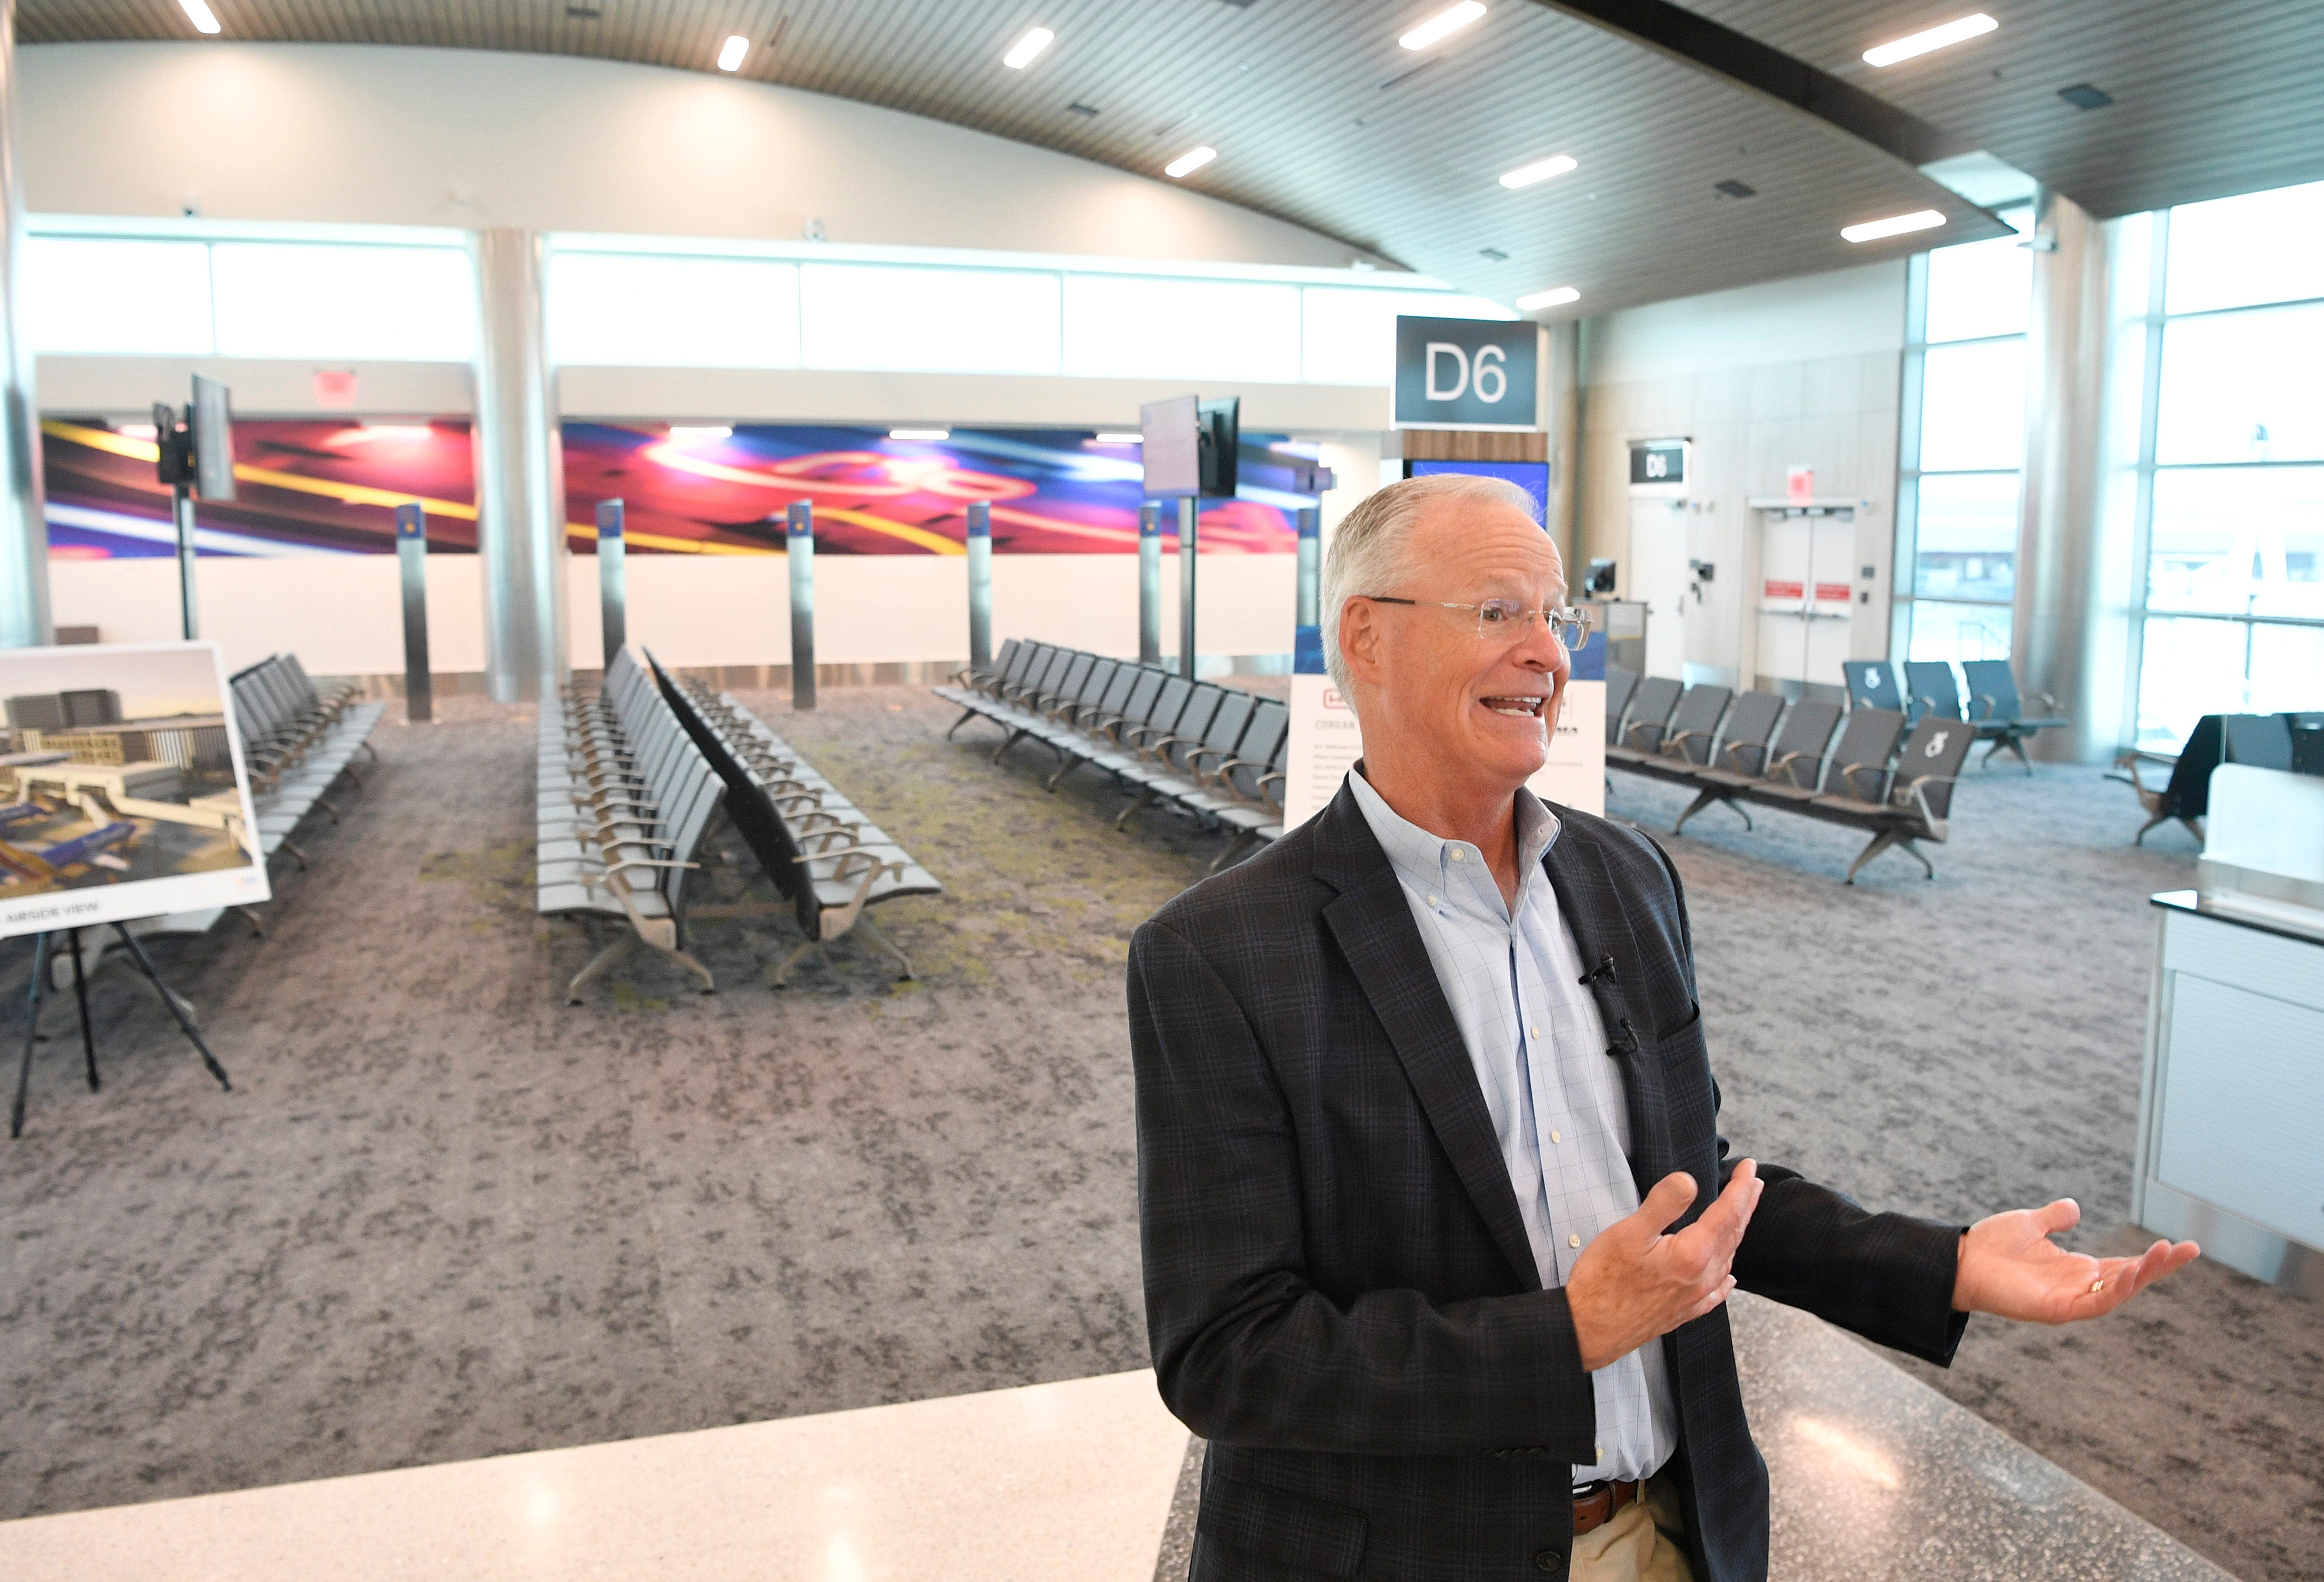 Nashville International Airport ranks among the top 10 U.S. airports